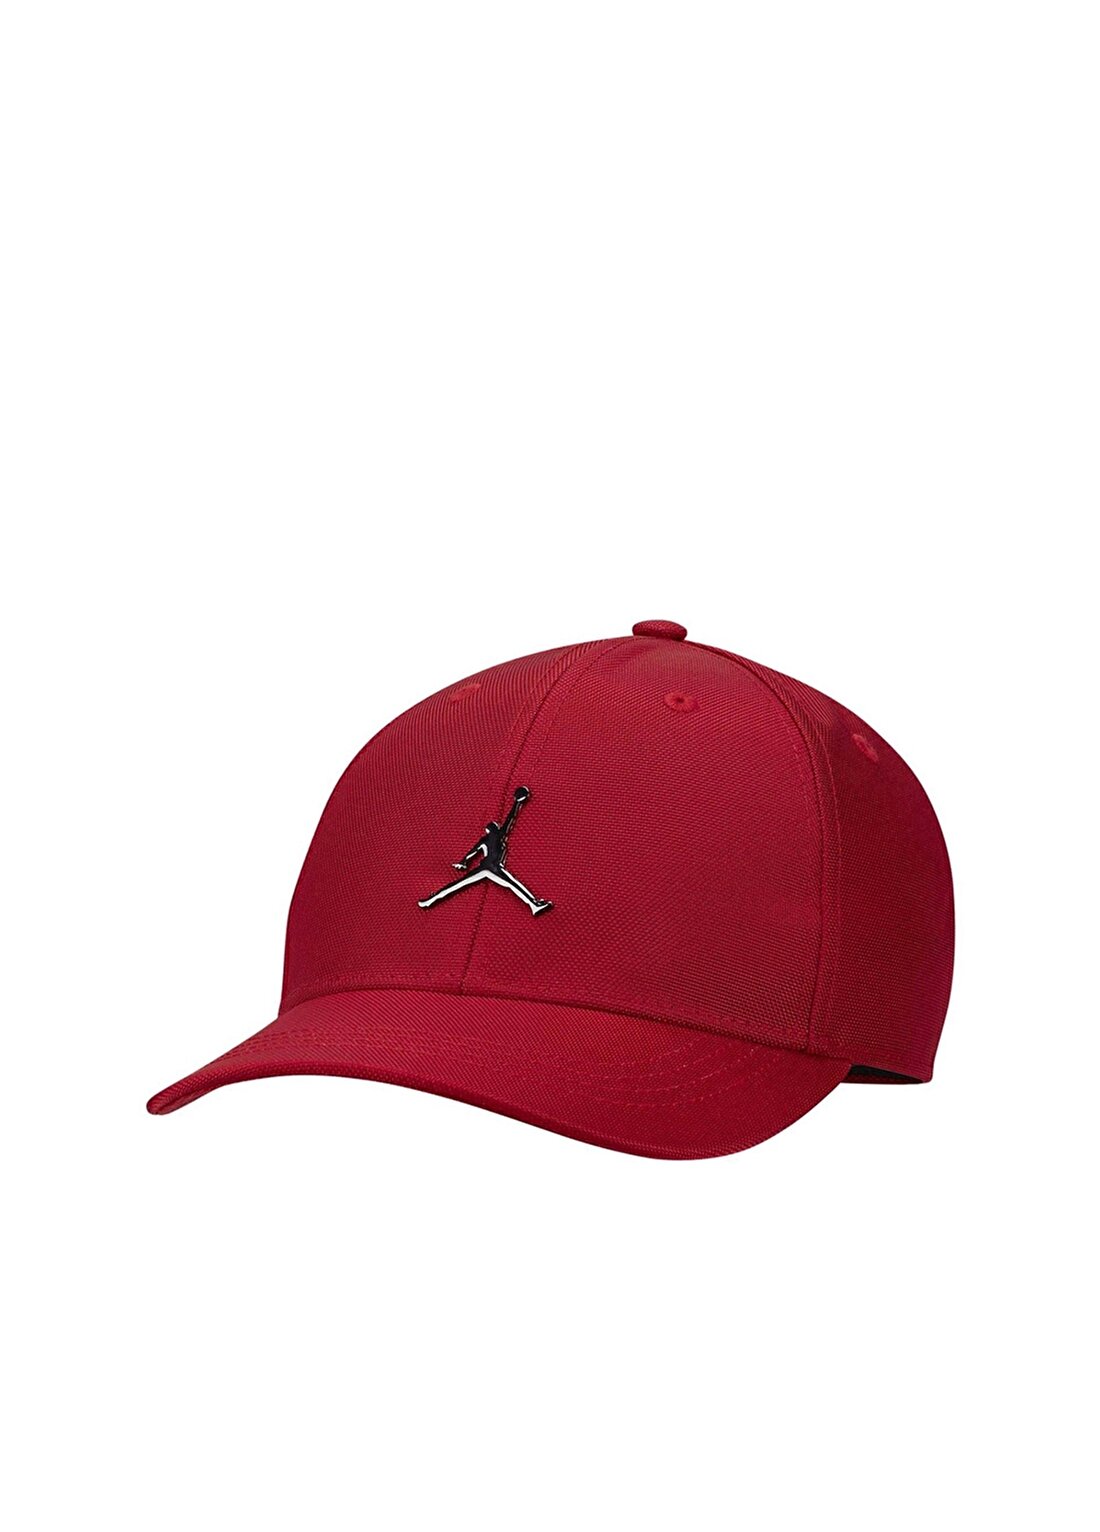 Nike Çocuk Kırmızı Şapka 9A0823-R78 JAN METAL JUMPMAN CURVE